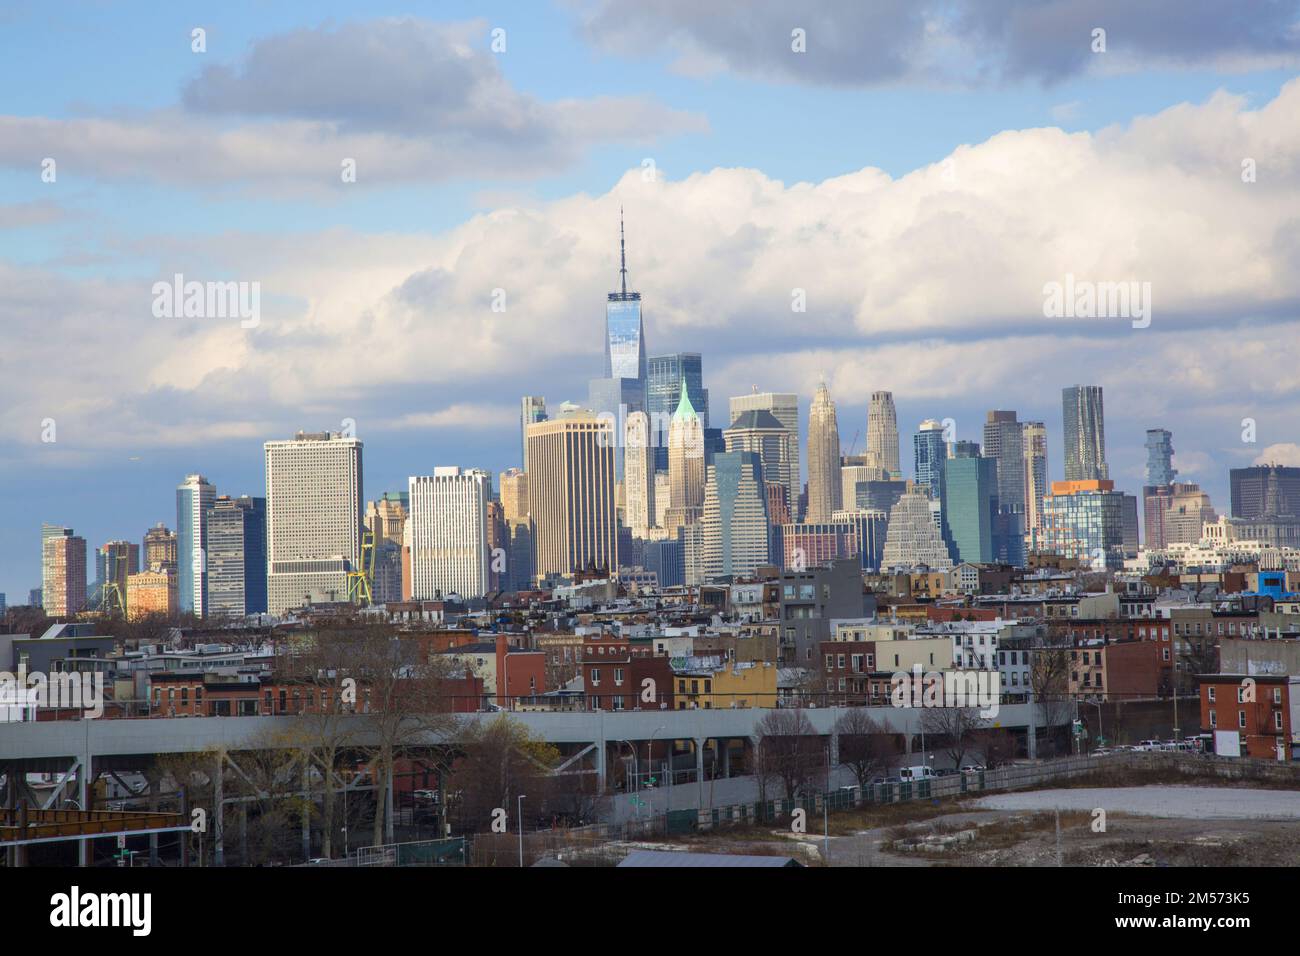 Lower Manhattan skyline shooting up behind Brooklyn neighborhoods in the foreground. Stock Photo